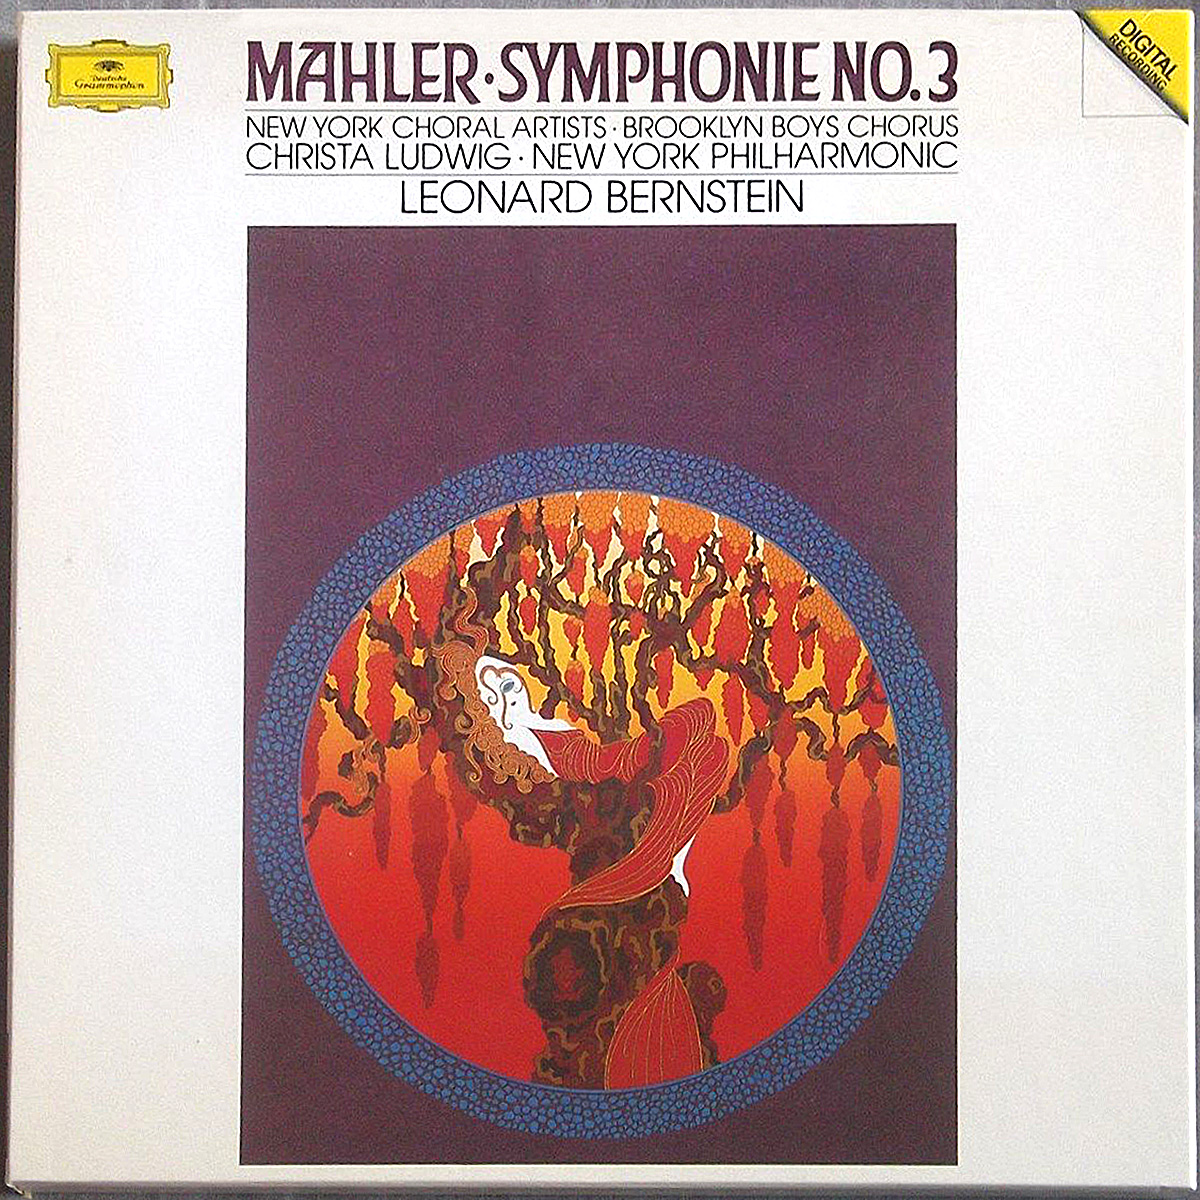 DGG 427 328 Mahler Symphonie 3 Bernstein DGG Digital Aufnahme